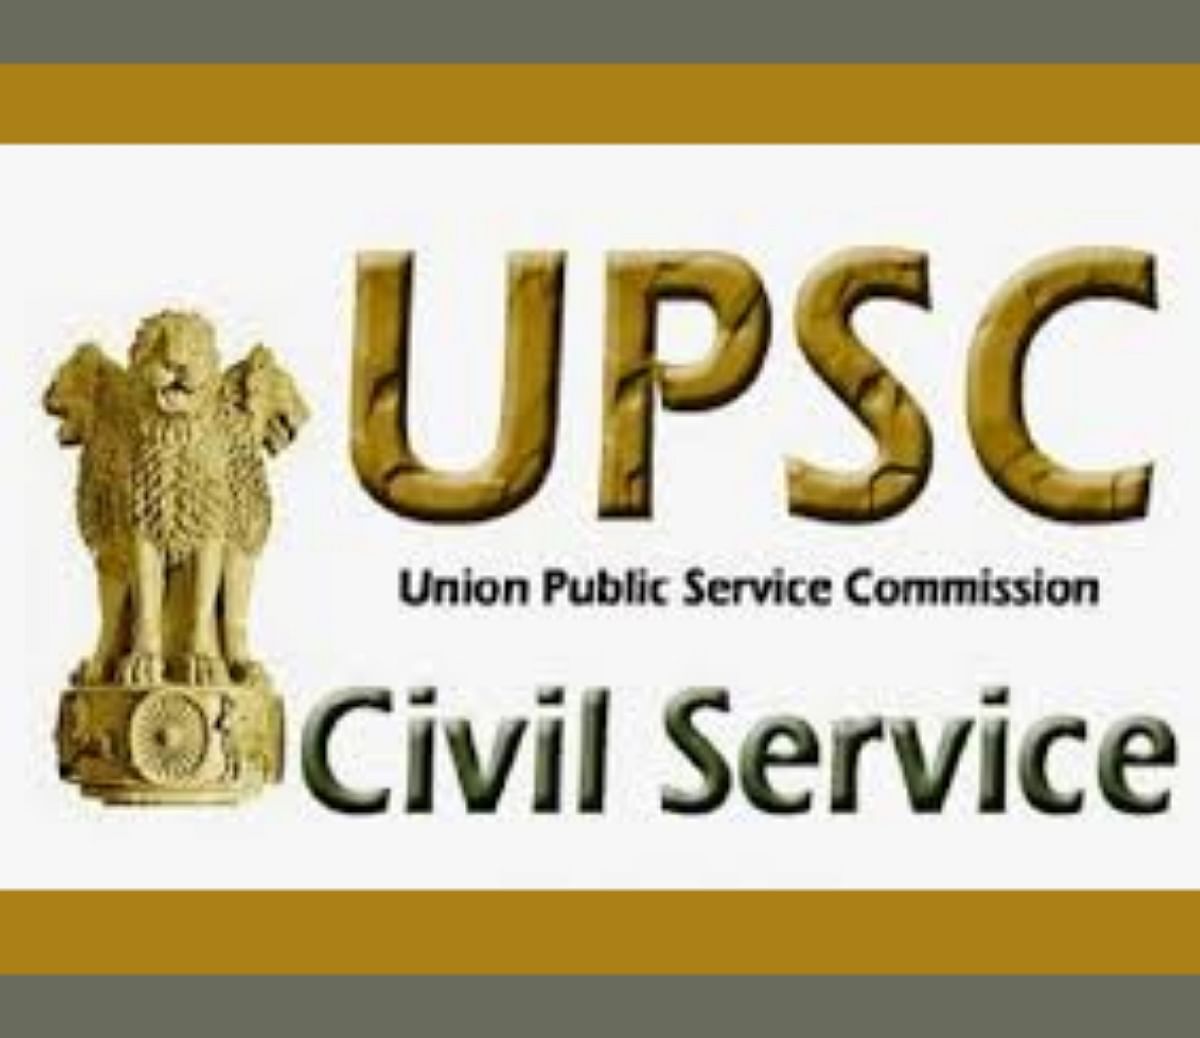 UPSC CSE Main 2022 : Detailed Application Form-1 Released, Get Registration Link Here